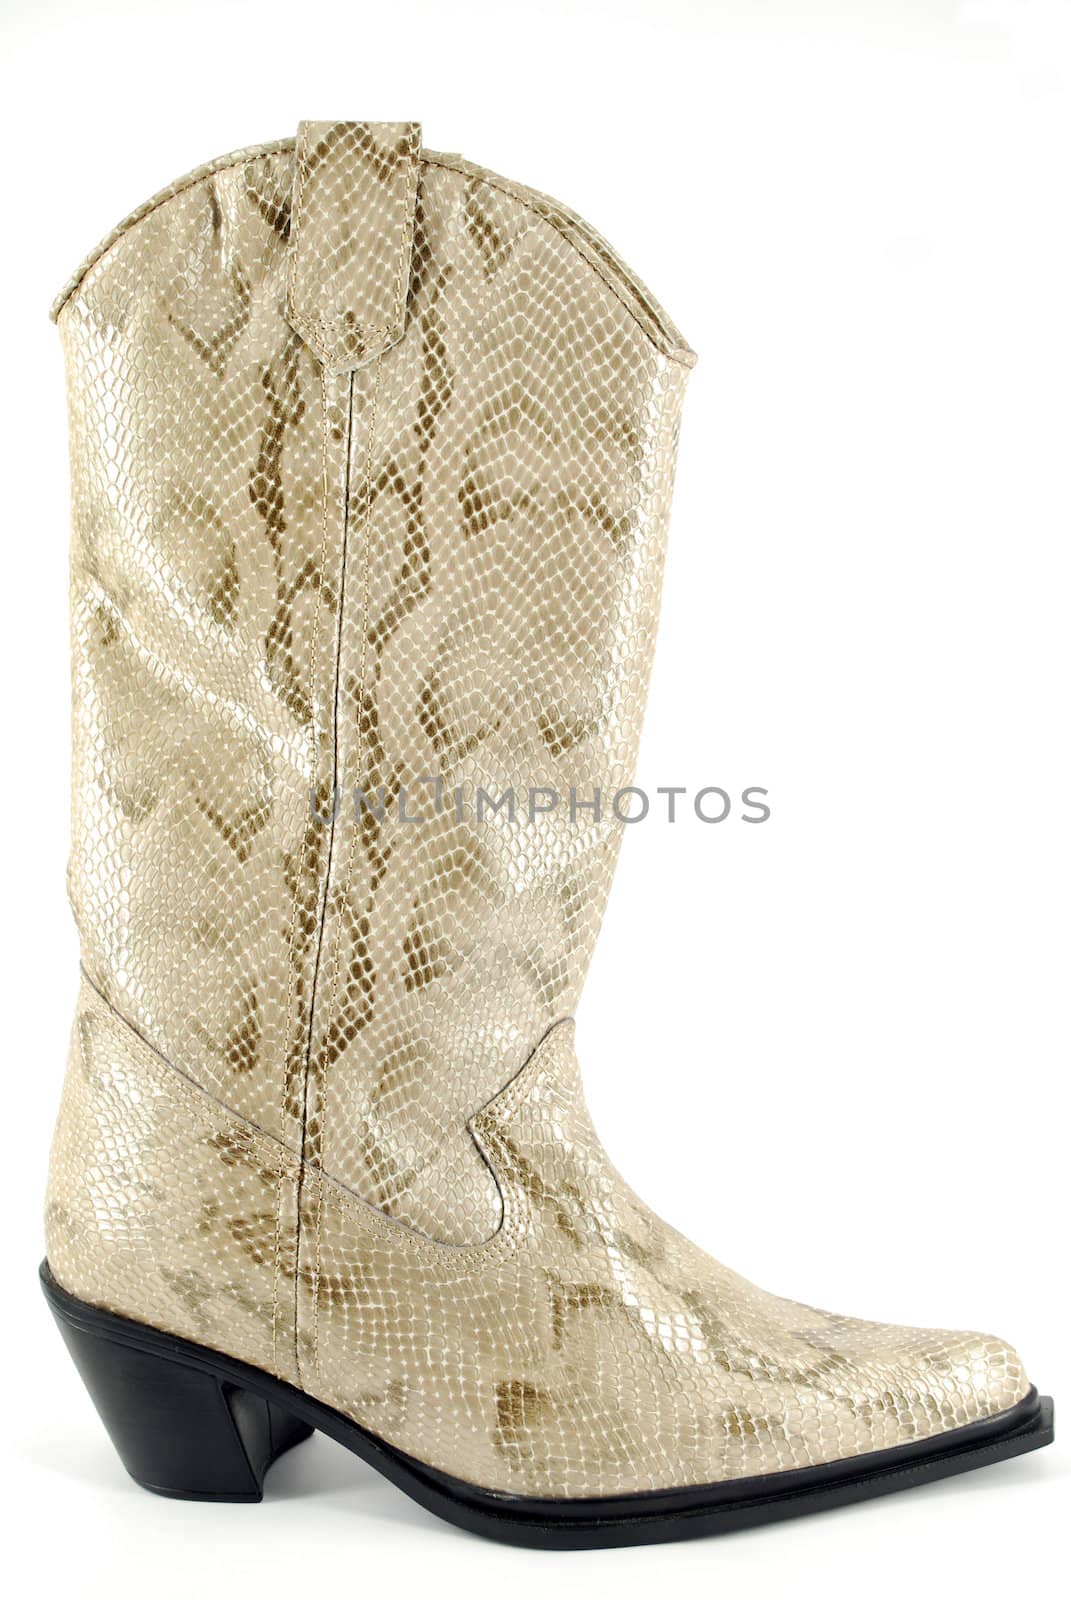 Woman white cowboy leather boot